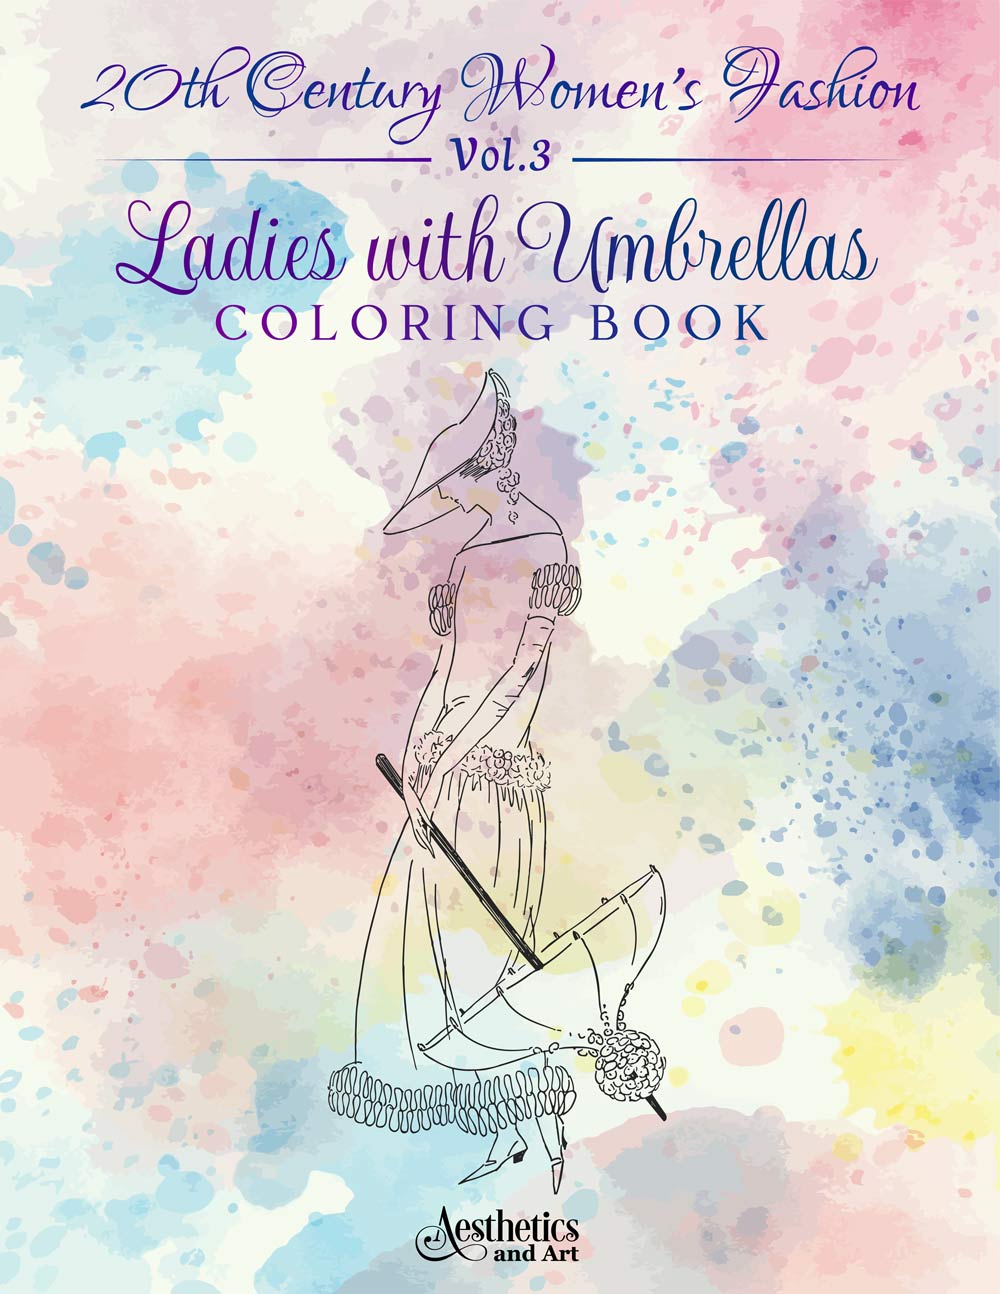 Ladies with Umprellas - Coloring Book - 20th Century Womens Fashion -VOL.3